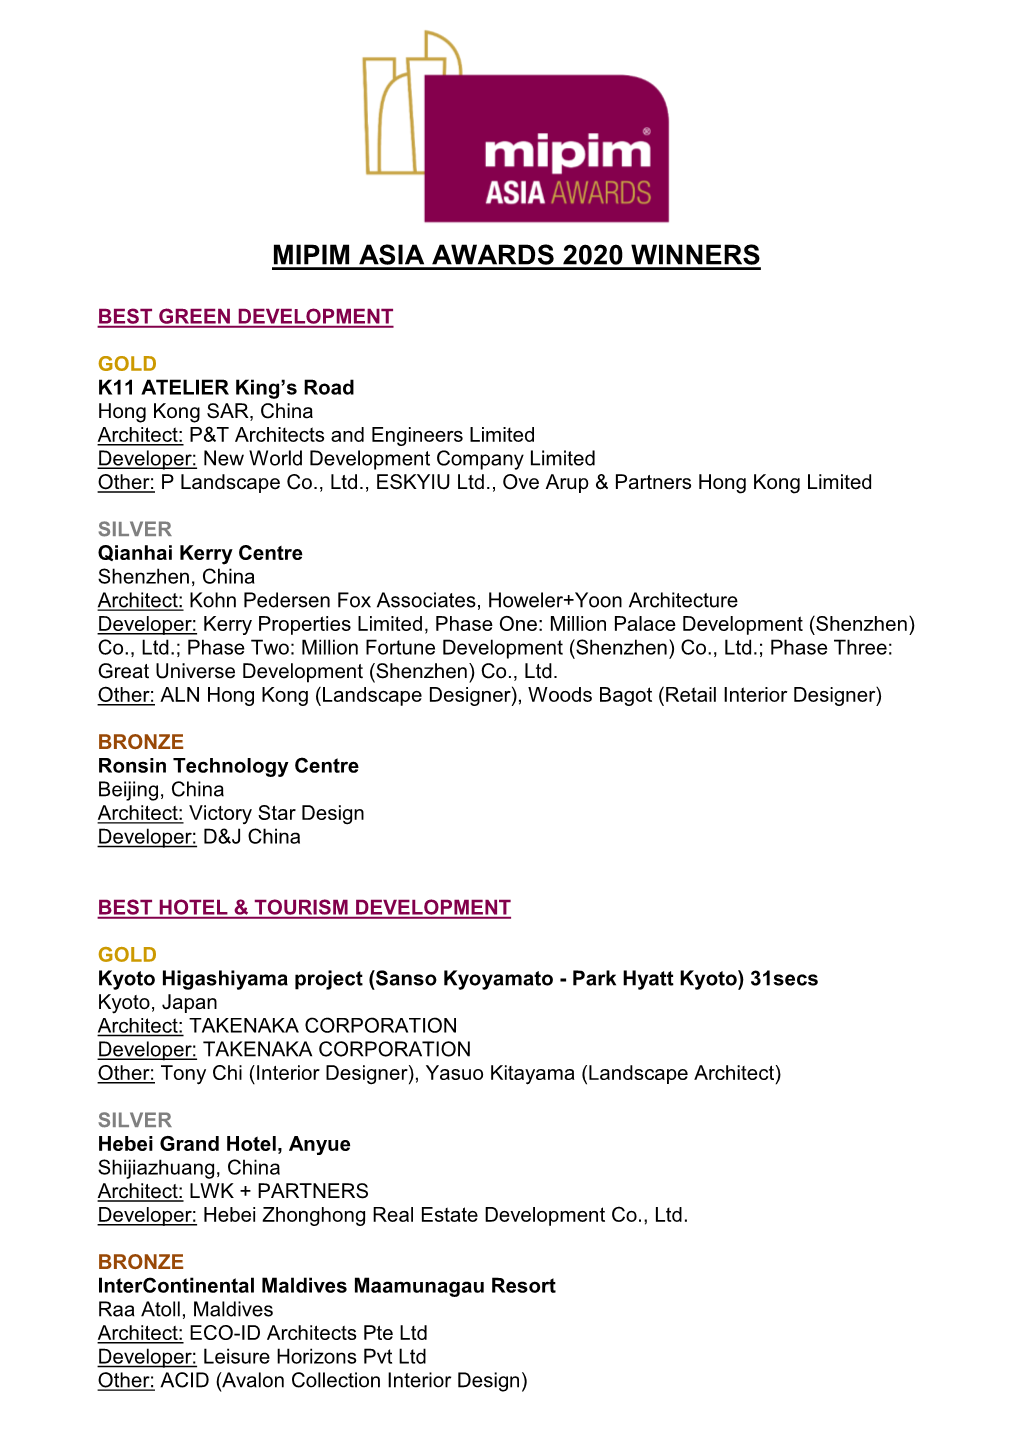 Mipim Asia Awards 2020 Winners